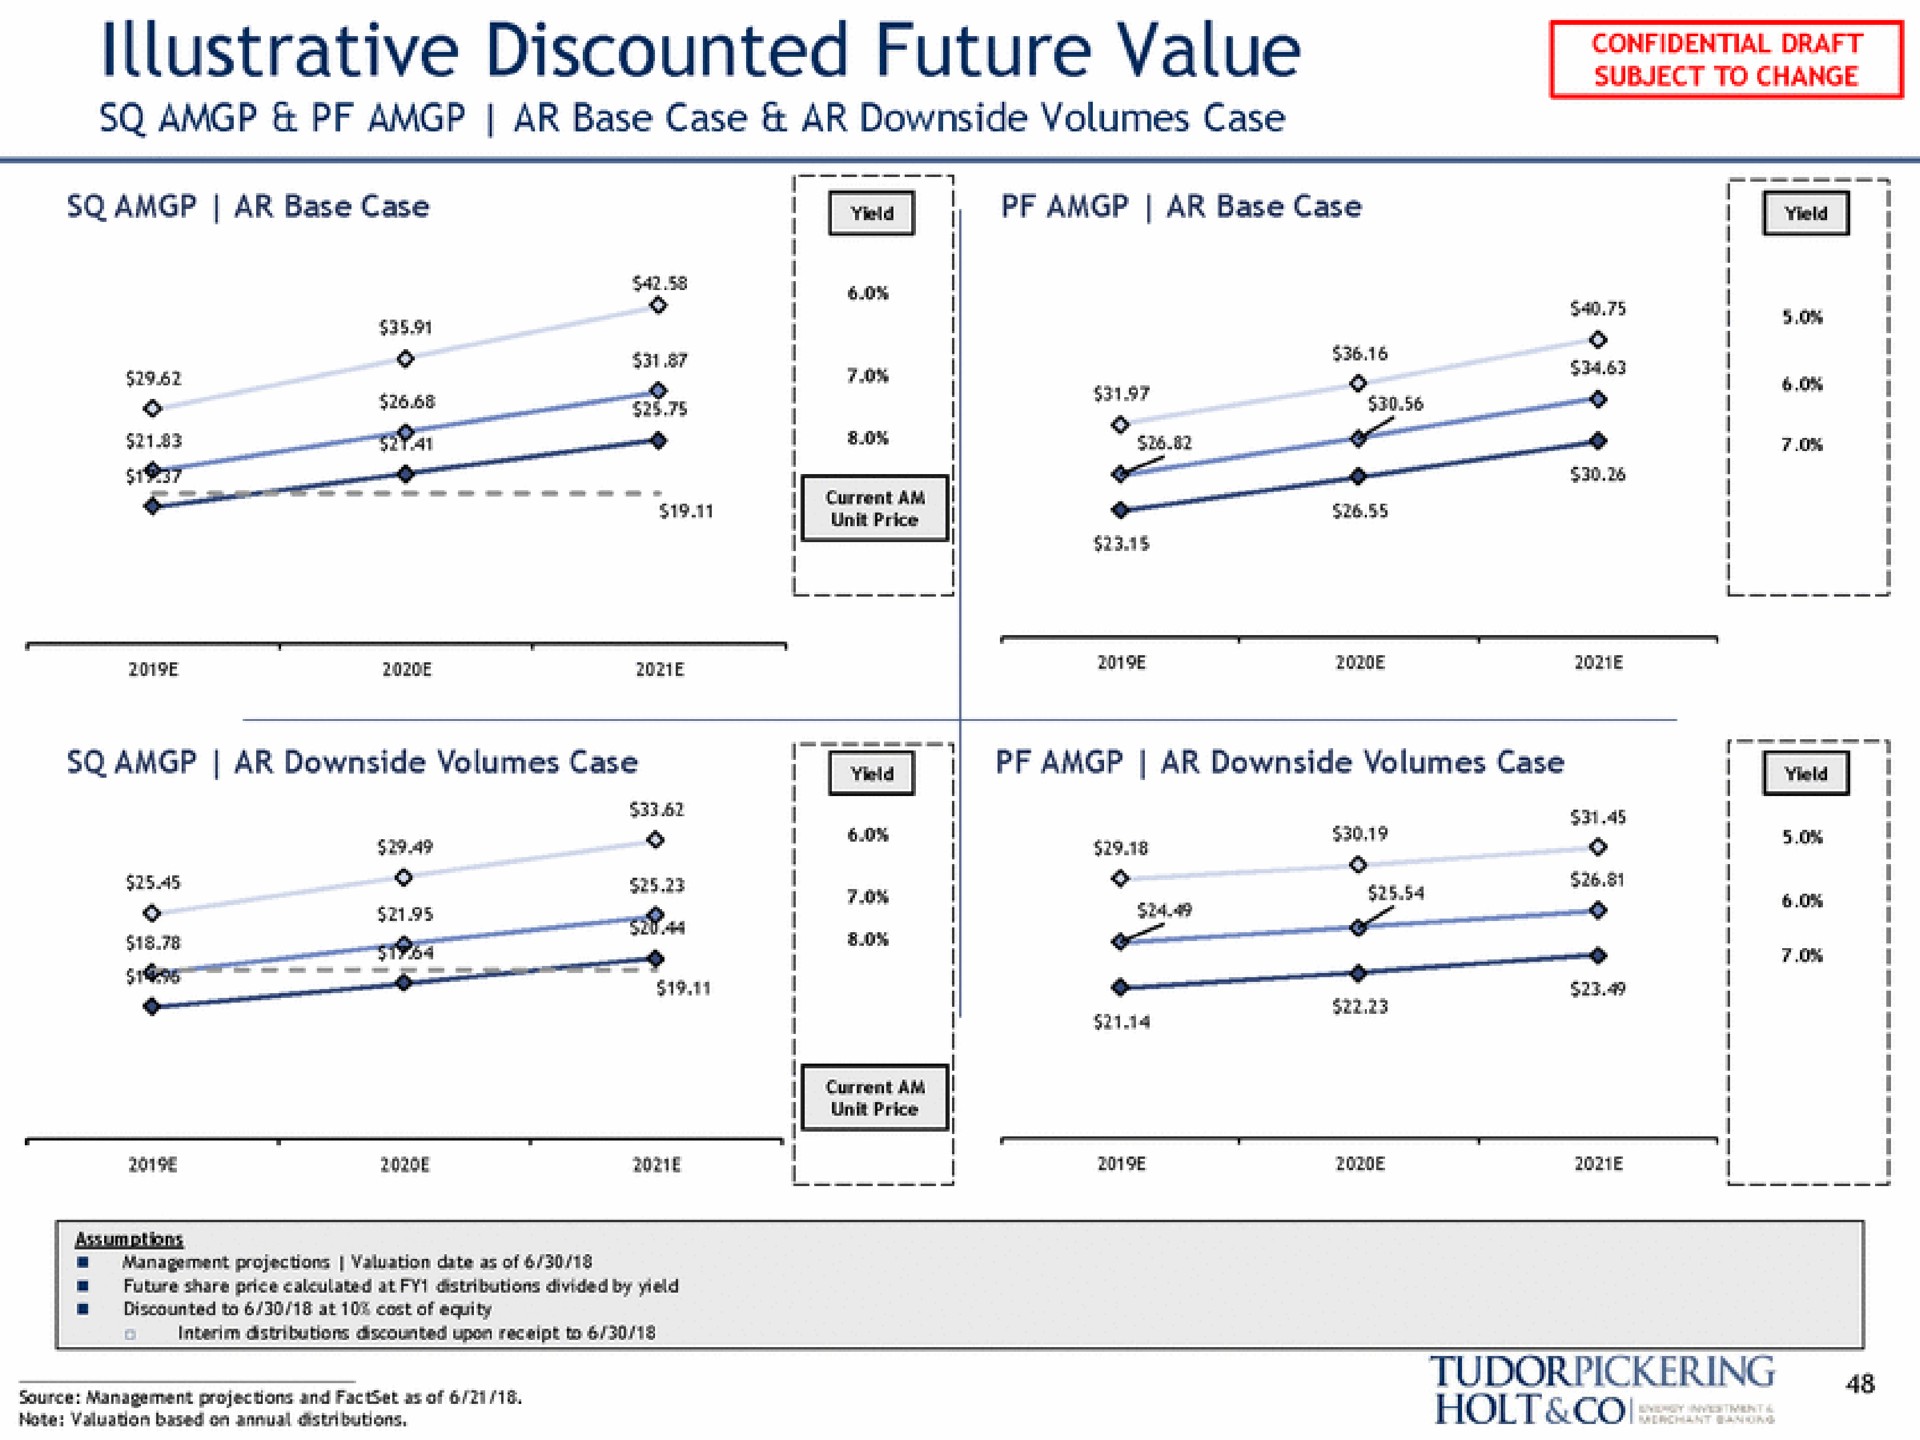 illustrative discounted future value base case downside volumes case | Tudor, Pickering, Holt & Co